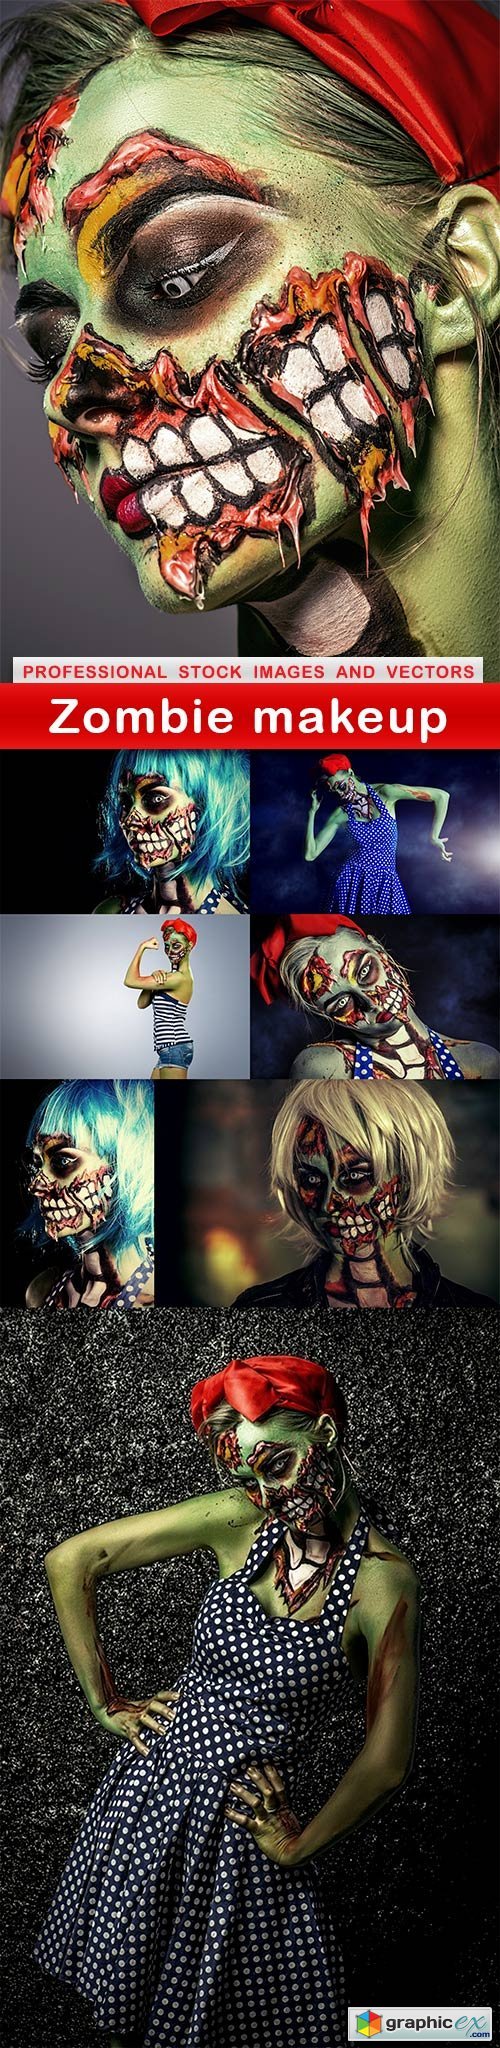 Zombie makeup - 8 UHQ JPEG